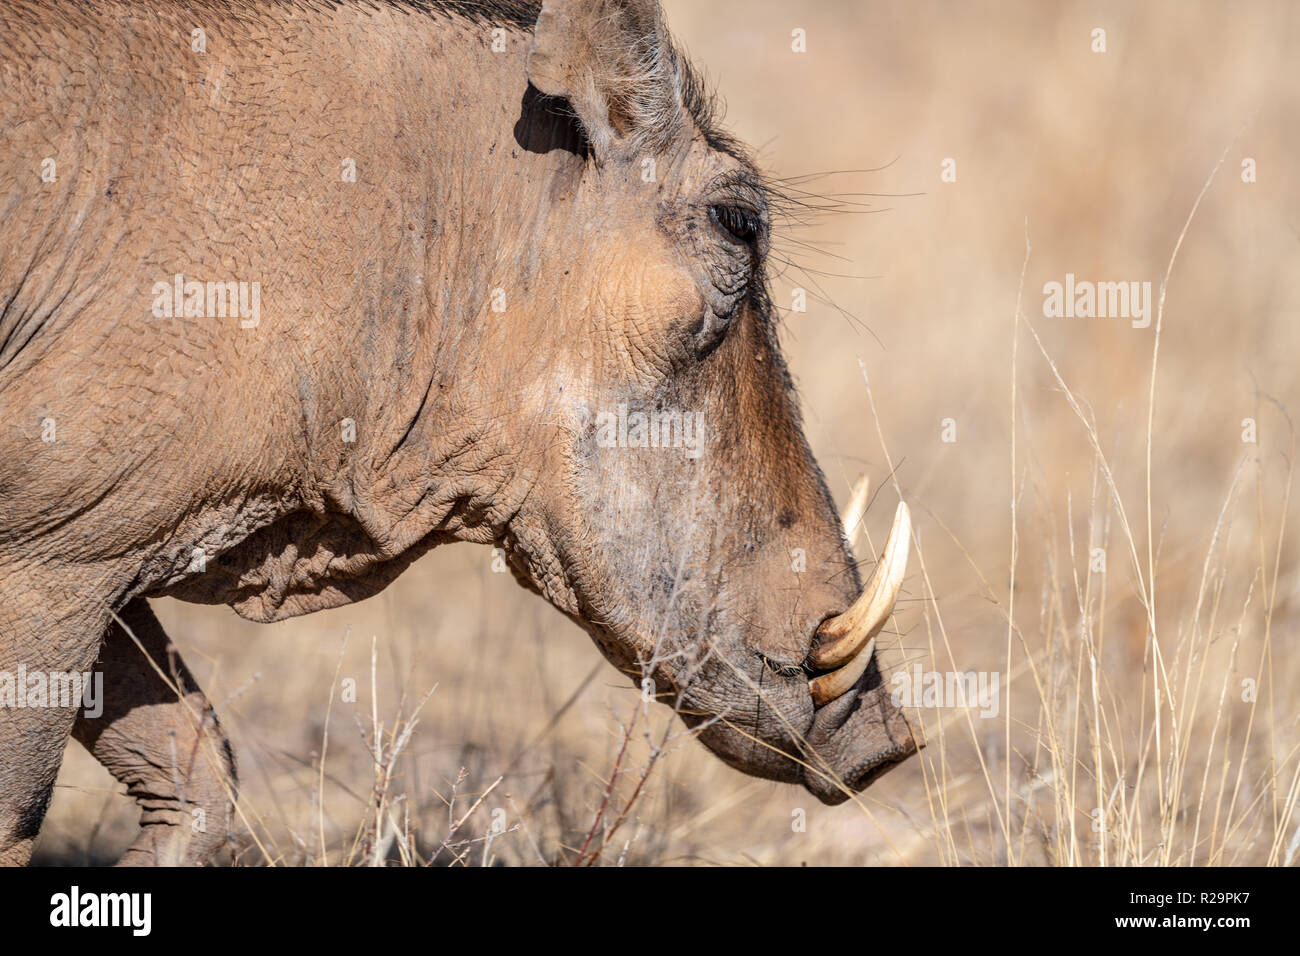 Common warthog (Phacochoeerus africanus) in Kenya, eastern Africa Stock Photo